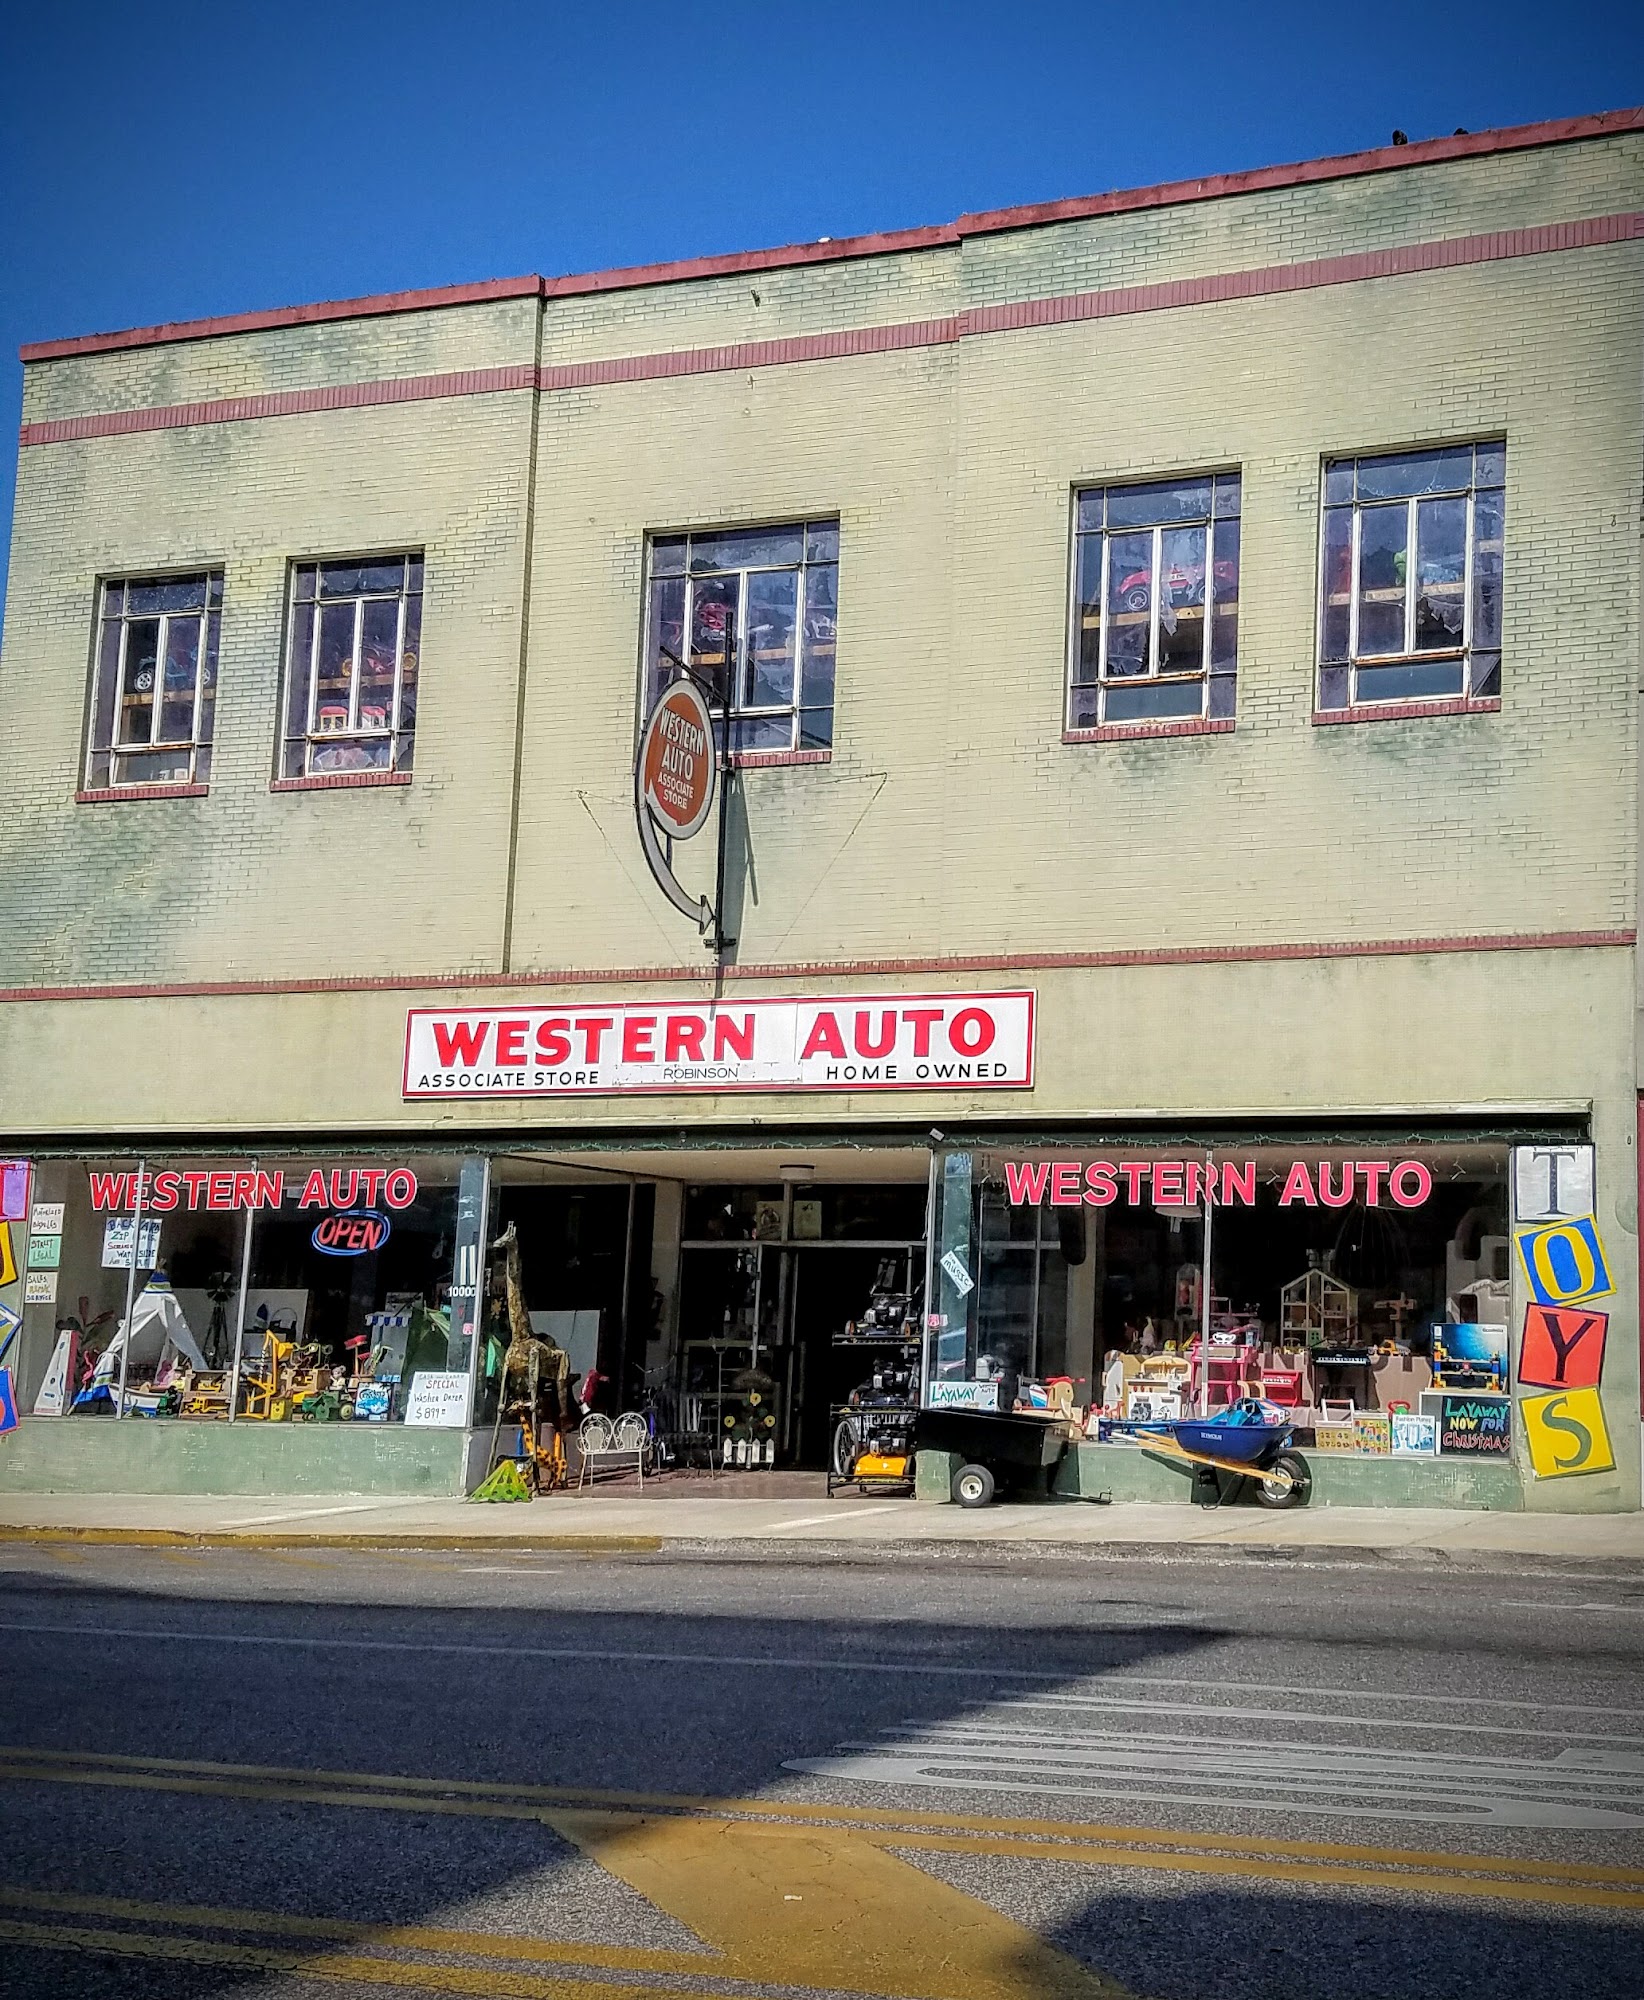 Western Auto Associates Store